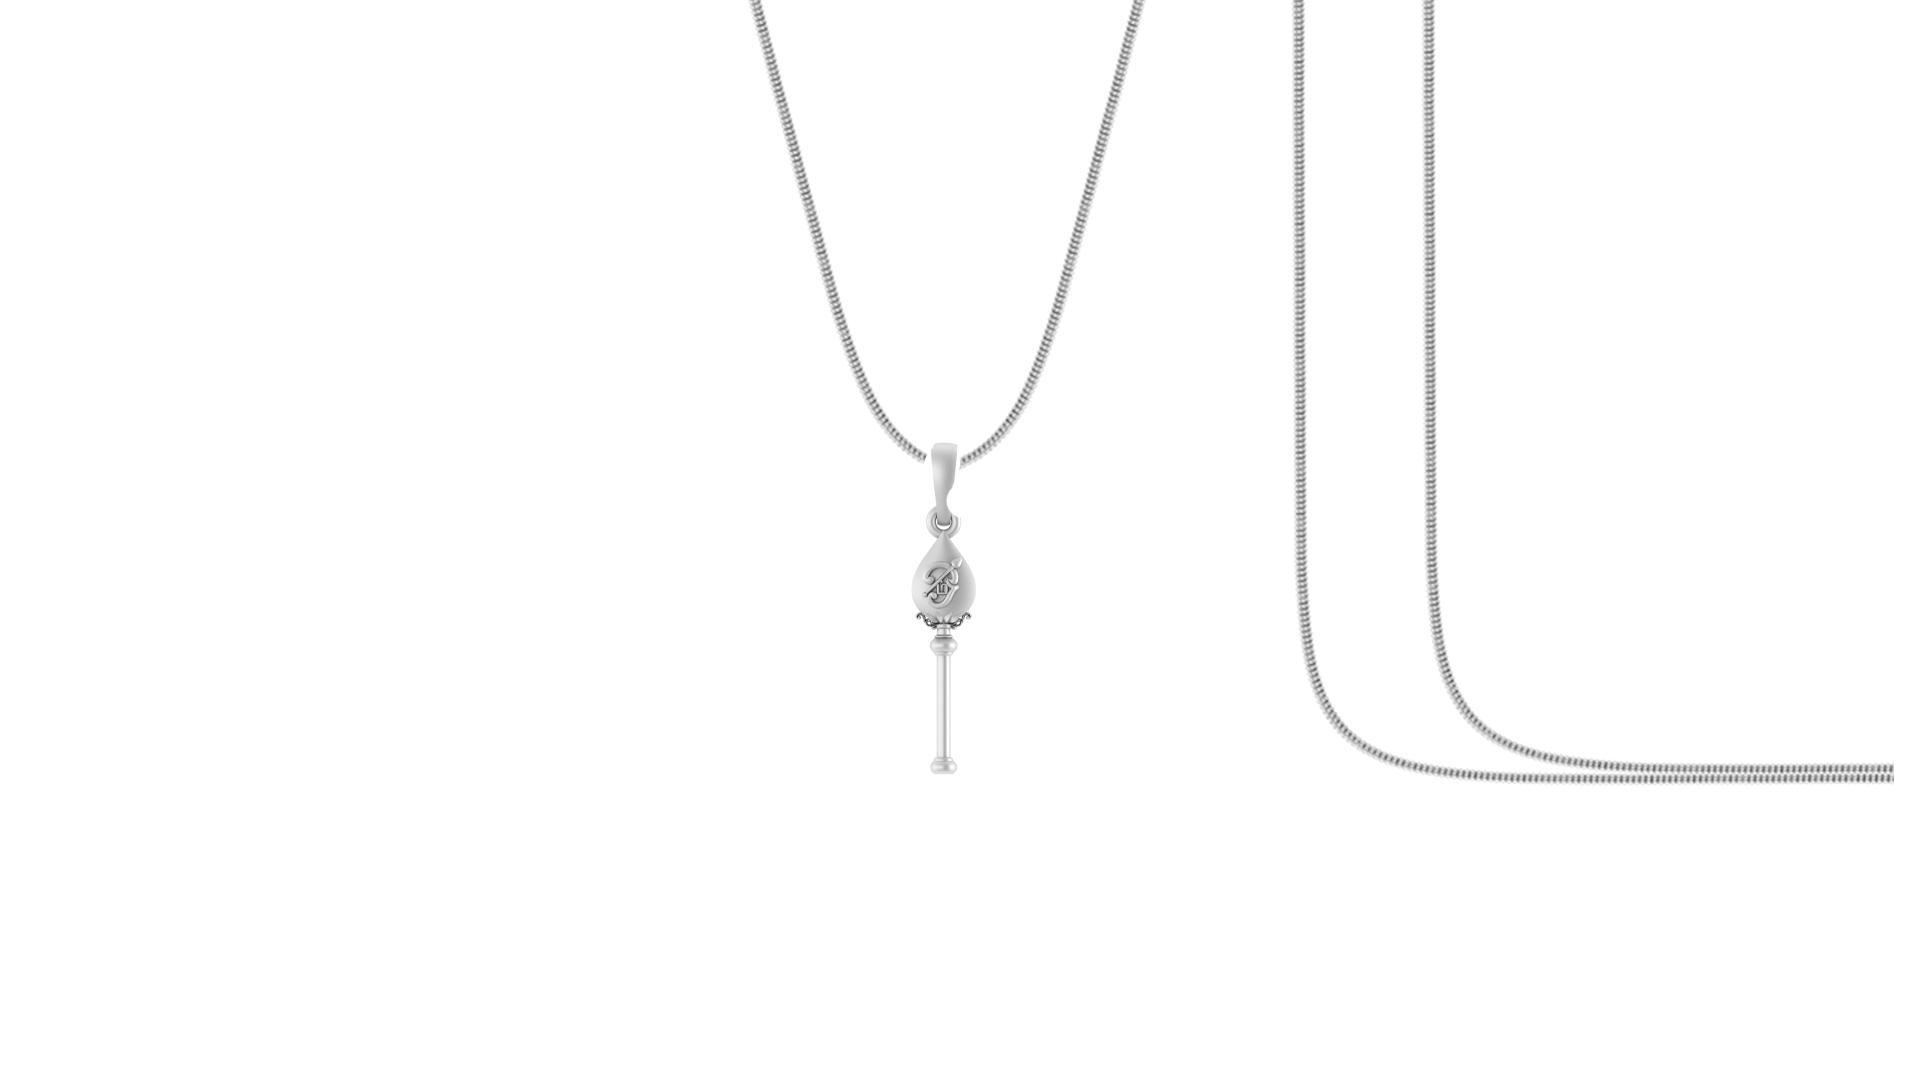 God Kartikeya Pure Silver 92.5% purity Chain pendant by Akshat Sapphire Murugan Pendant (Pendant with Snake Chain-18 inches)